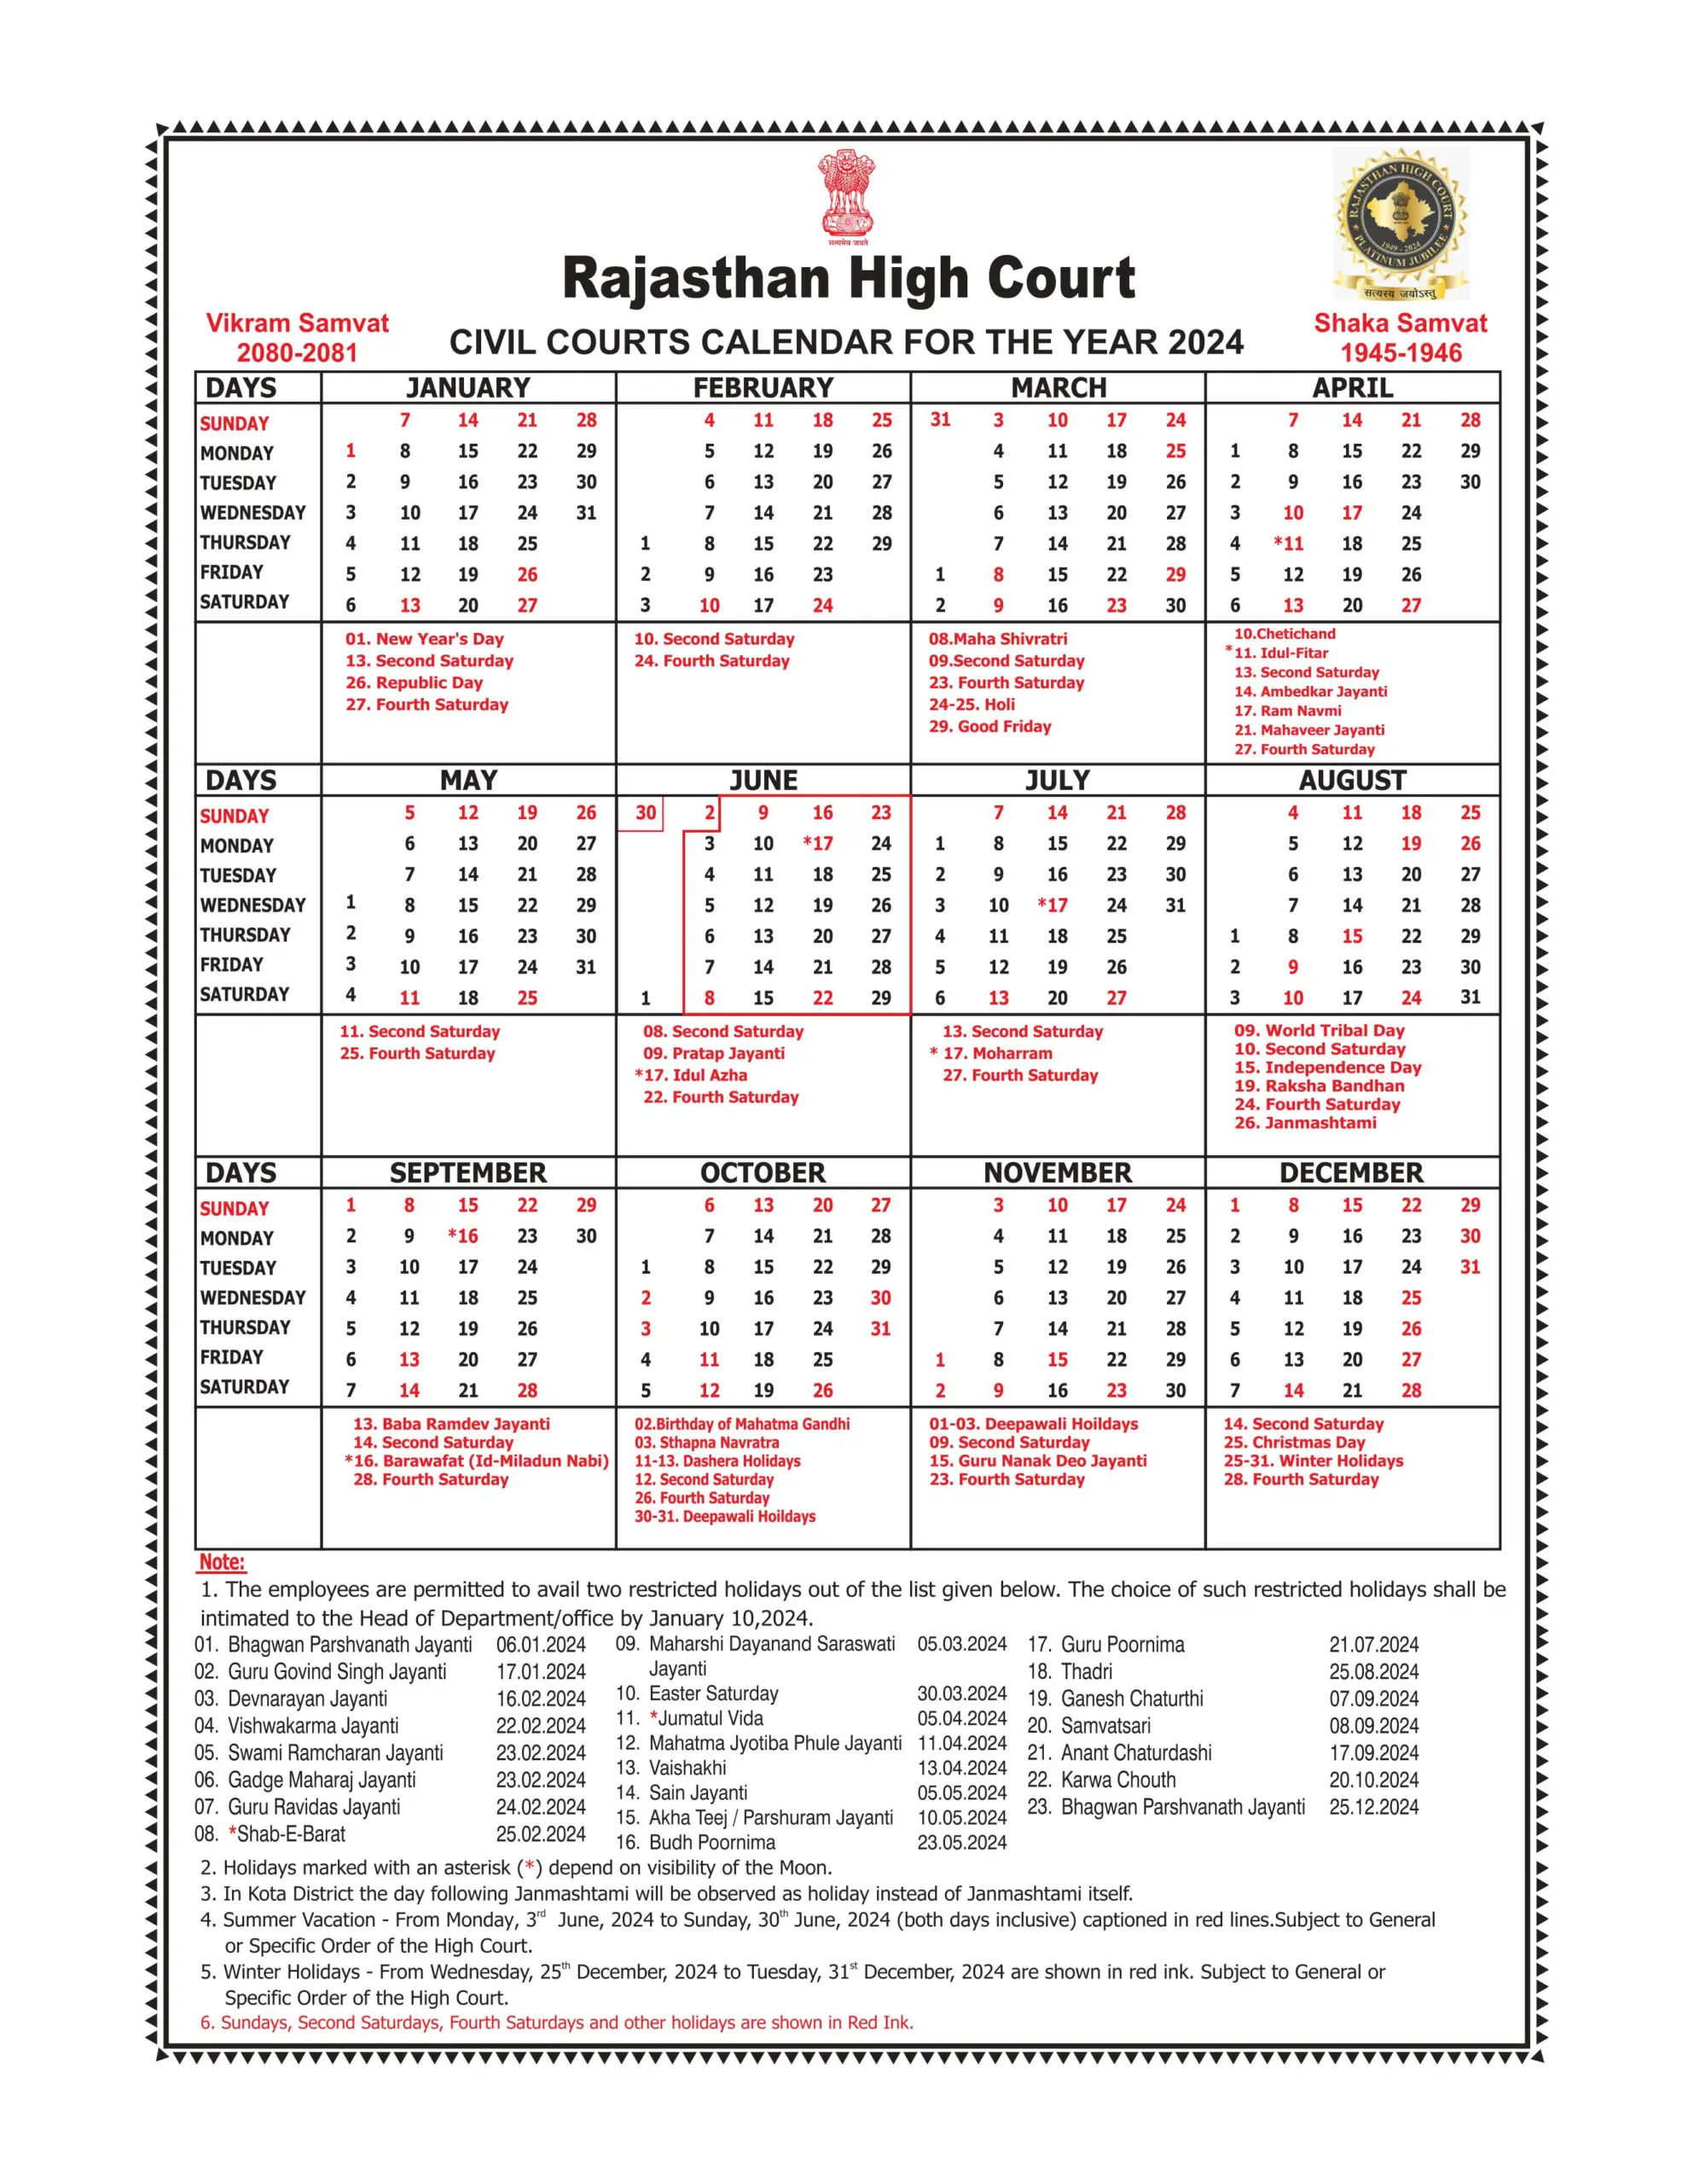 Rajasthan High Court Calendar 2024 scaled